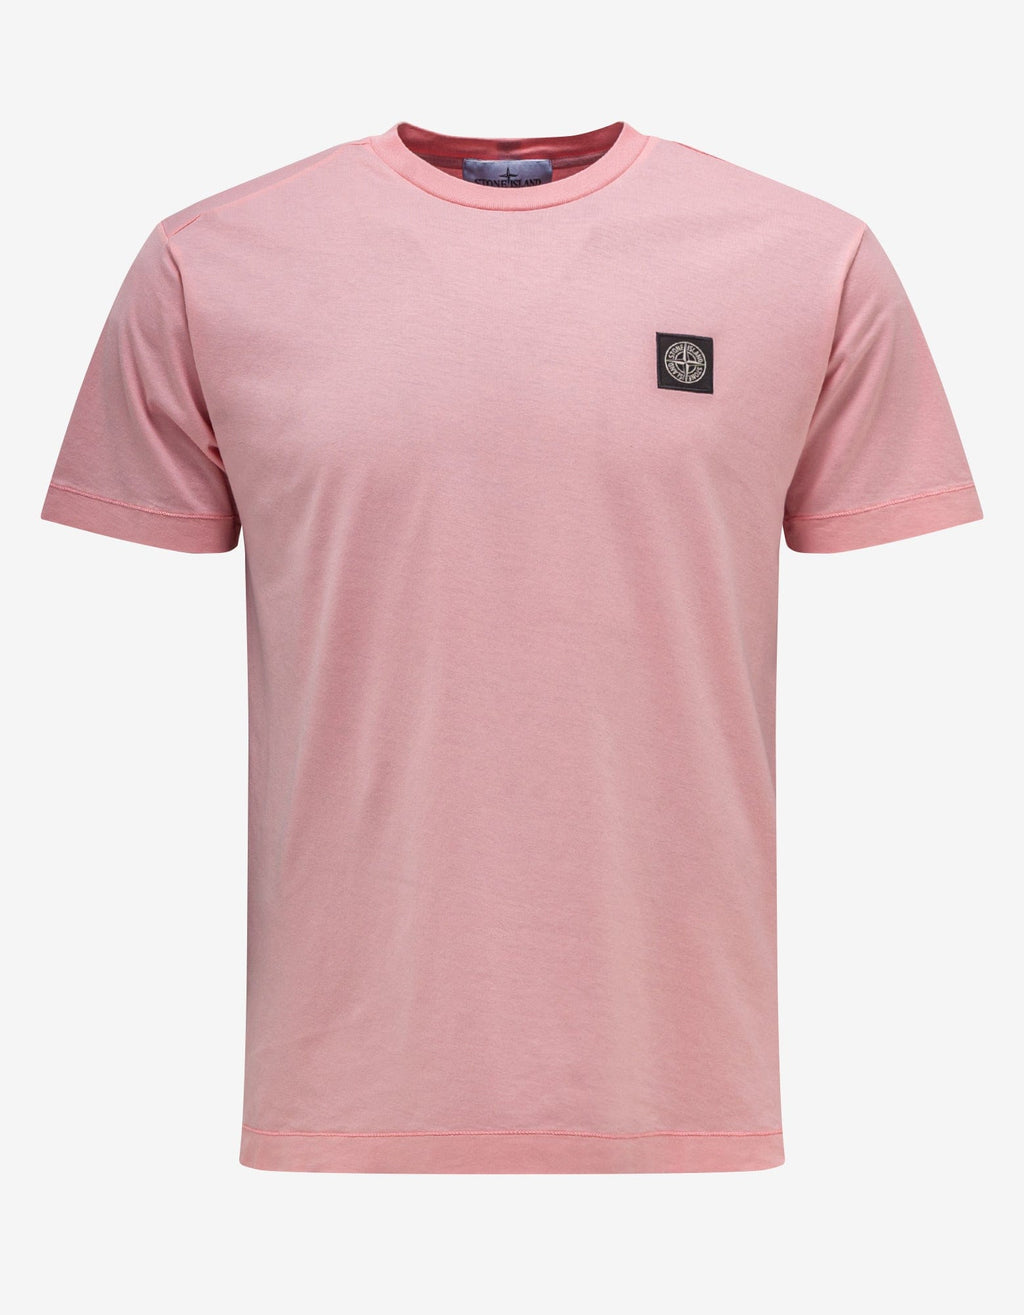 Stone Island Stone Island Pink Compass Patch T-Shirt